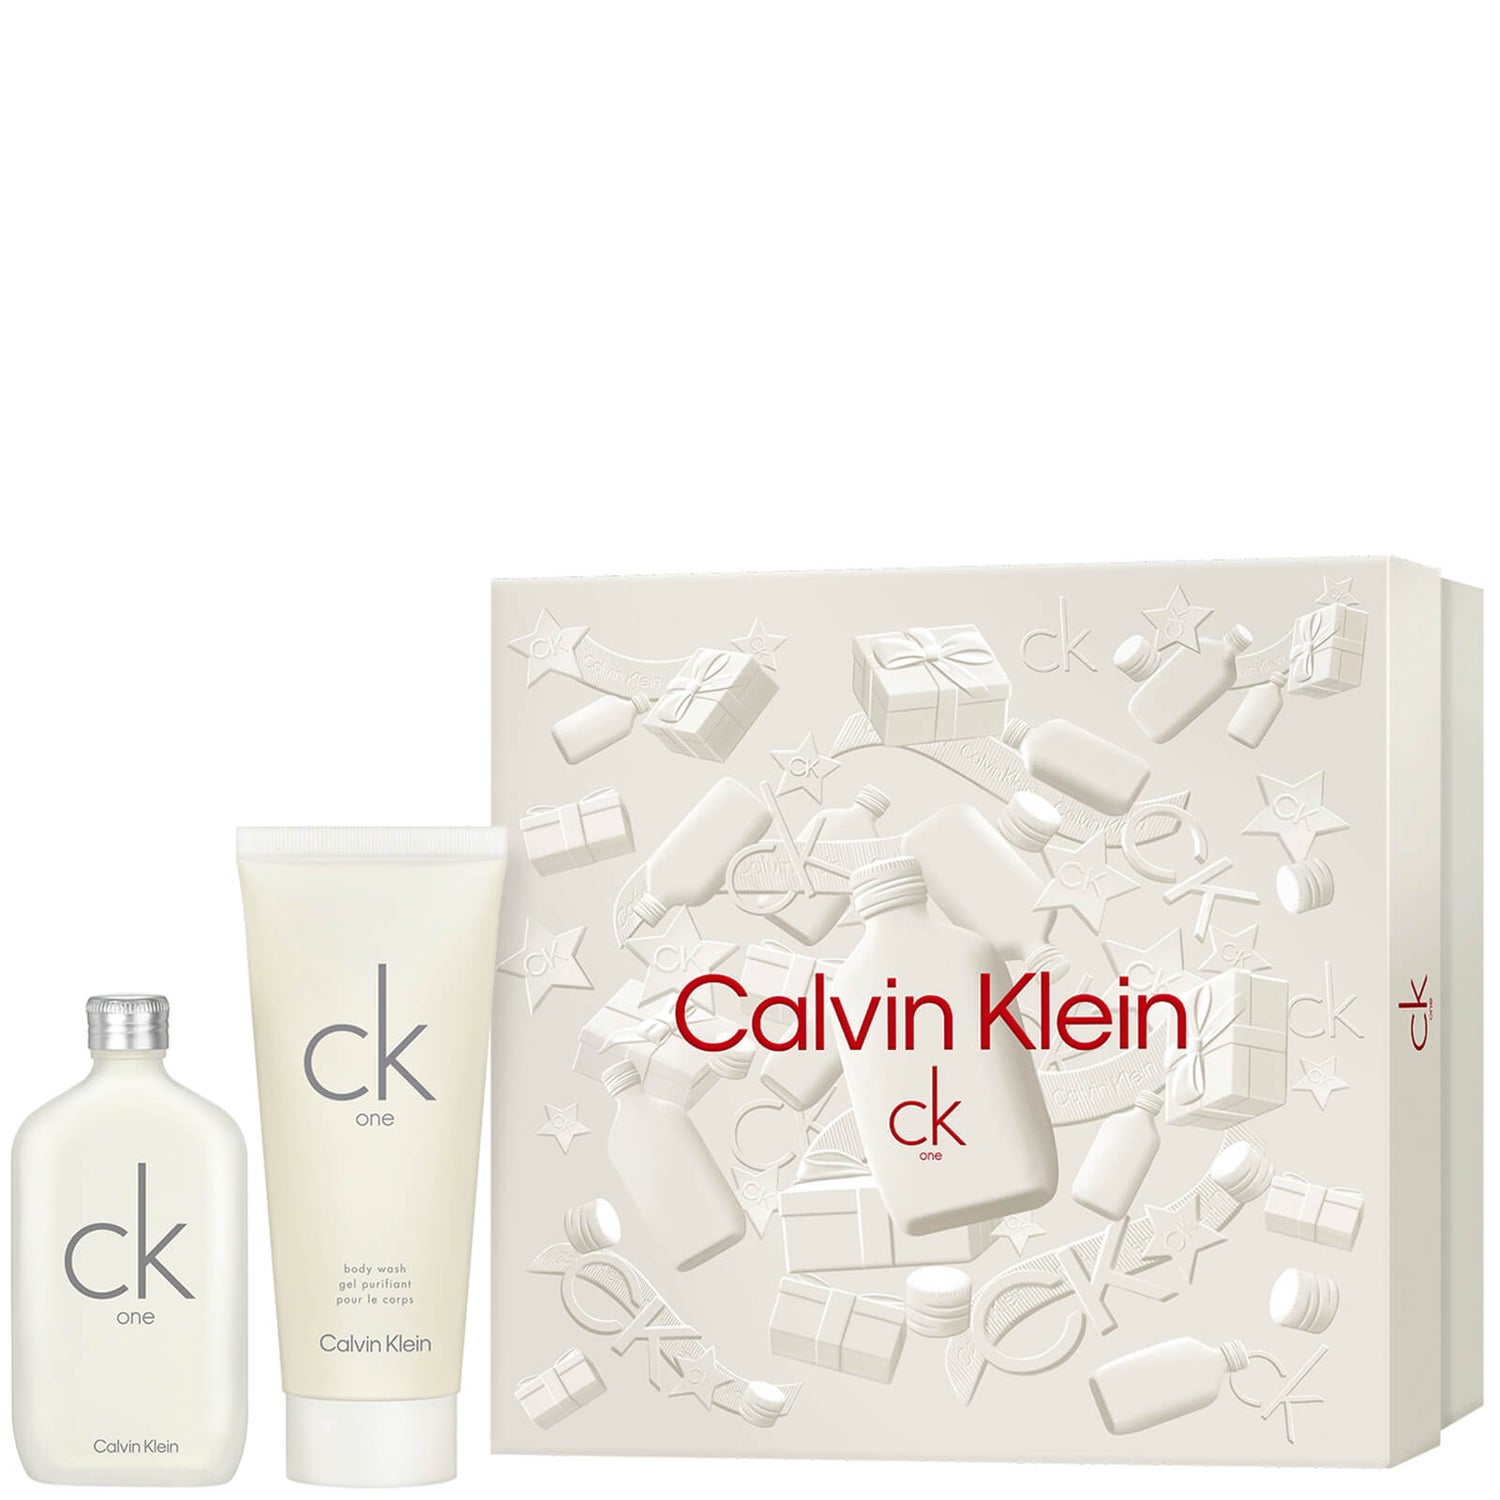 Calvin Klein CK One Eau de Toilette Gift Set